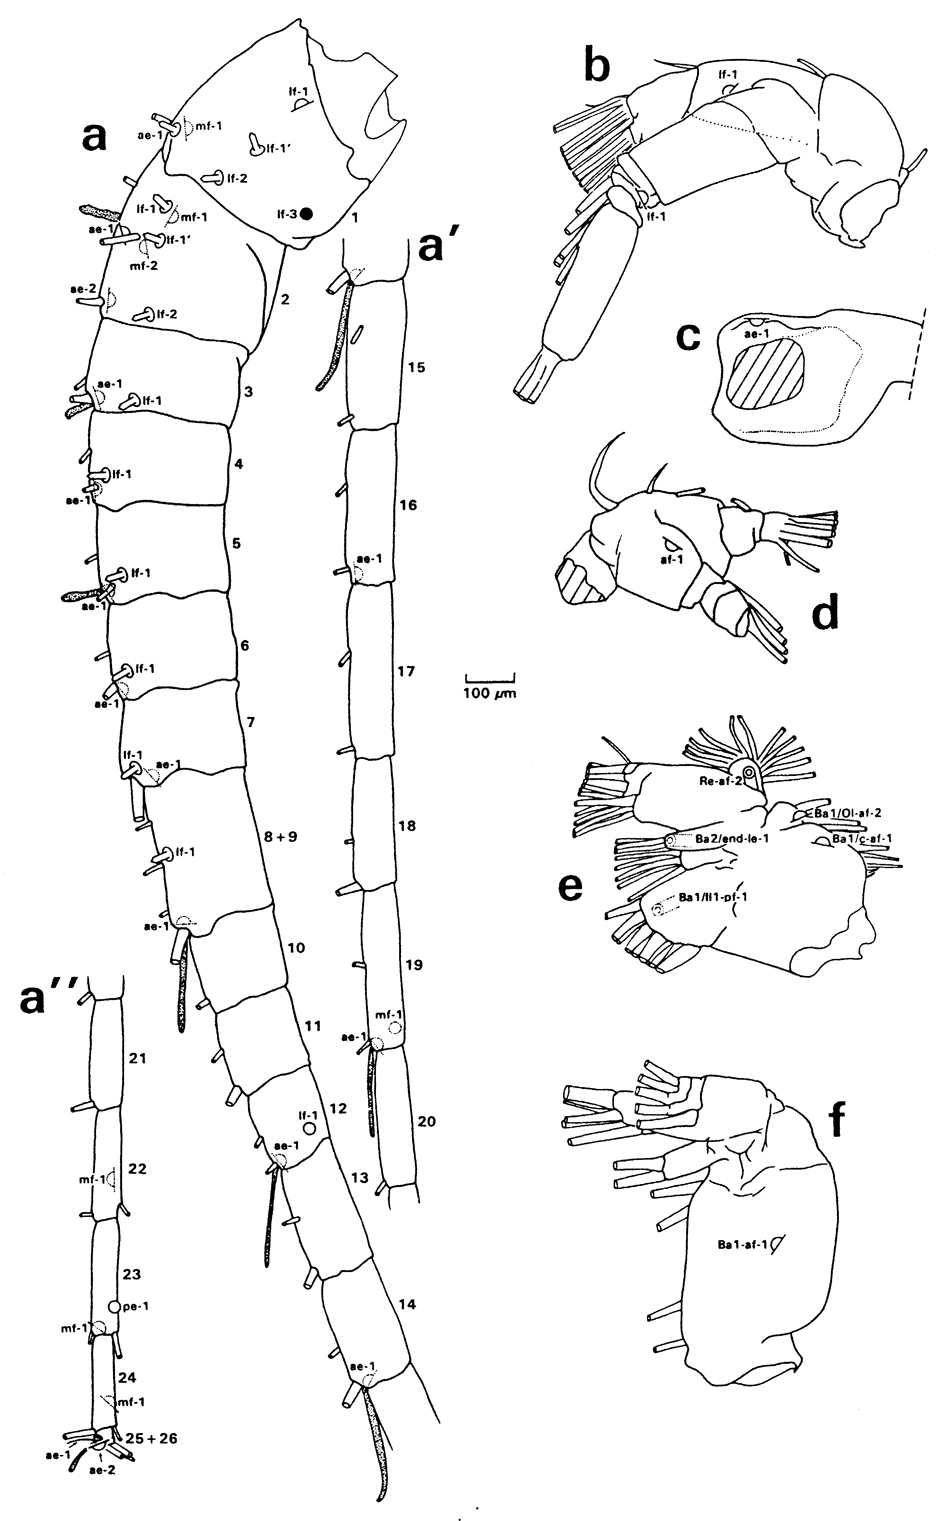 Species Undeuchaeta incisa - Plate 24 of morphological figures